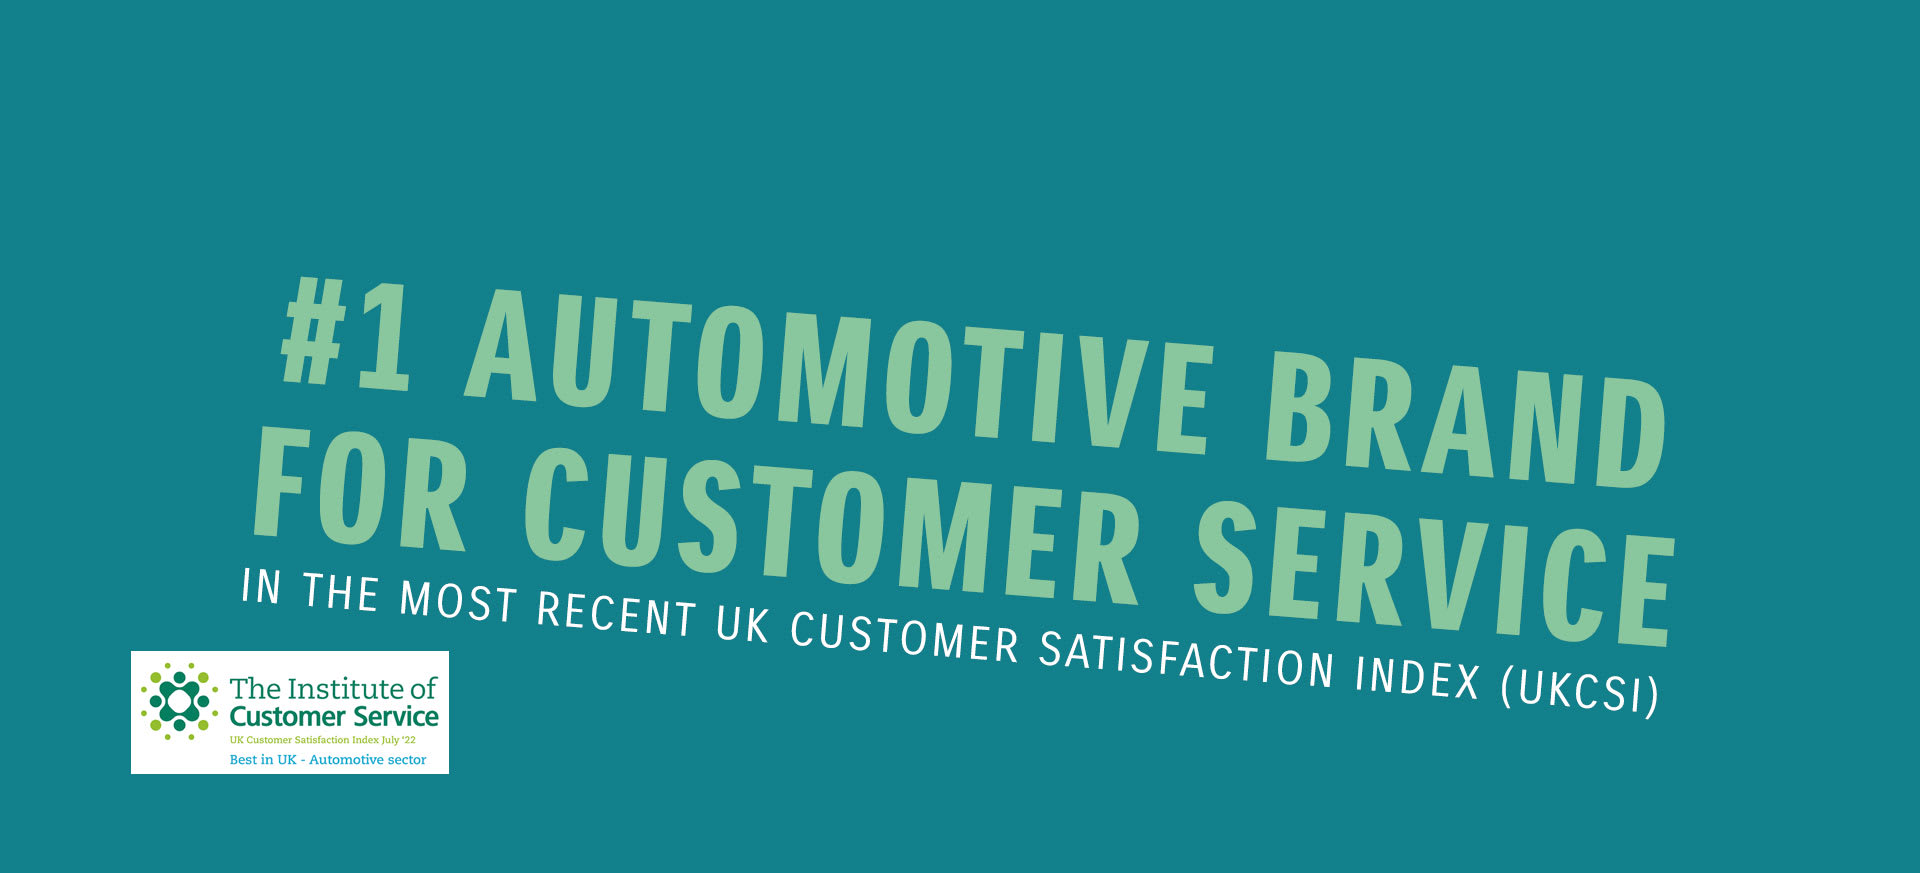 #1 Automotive Brand for Customer Service